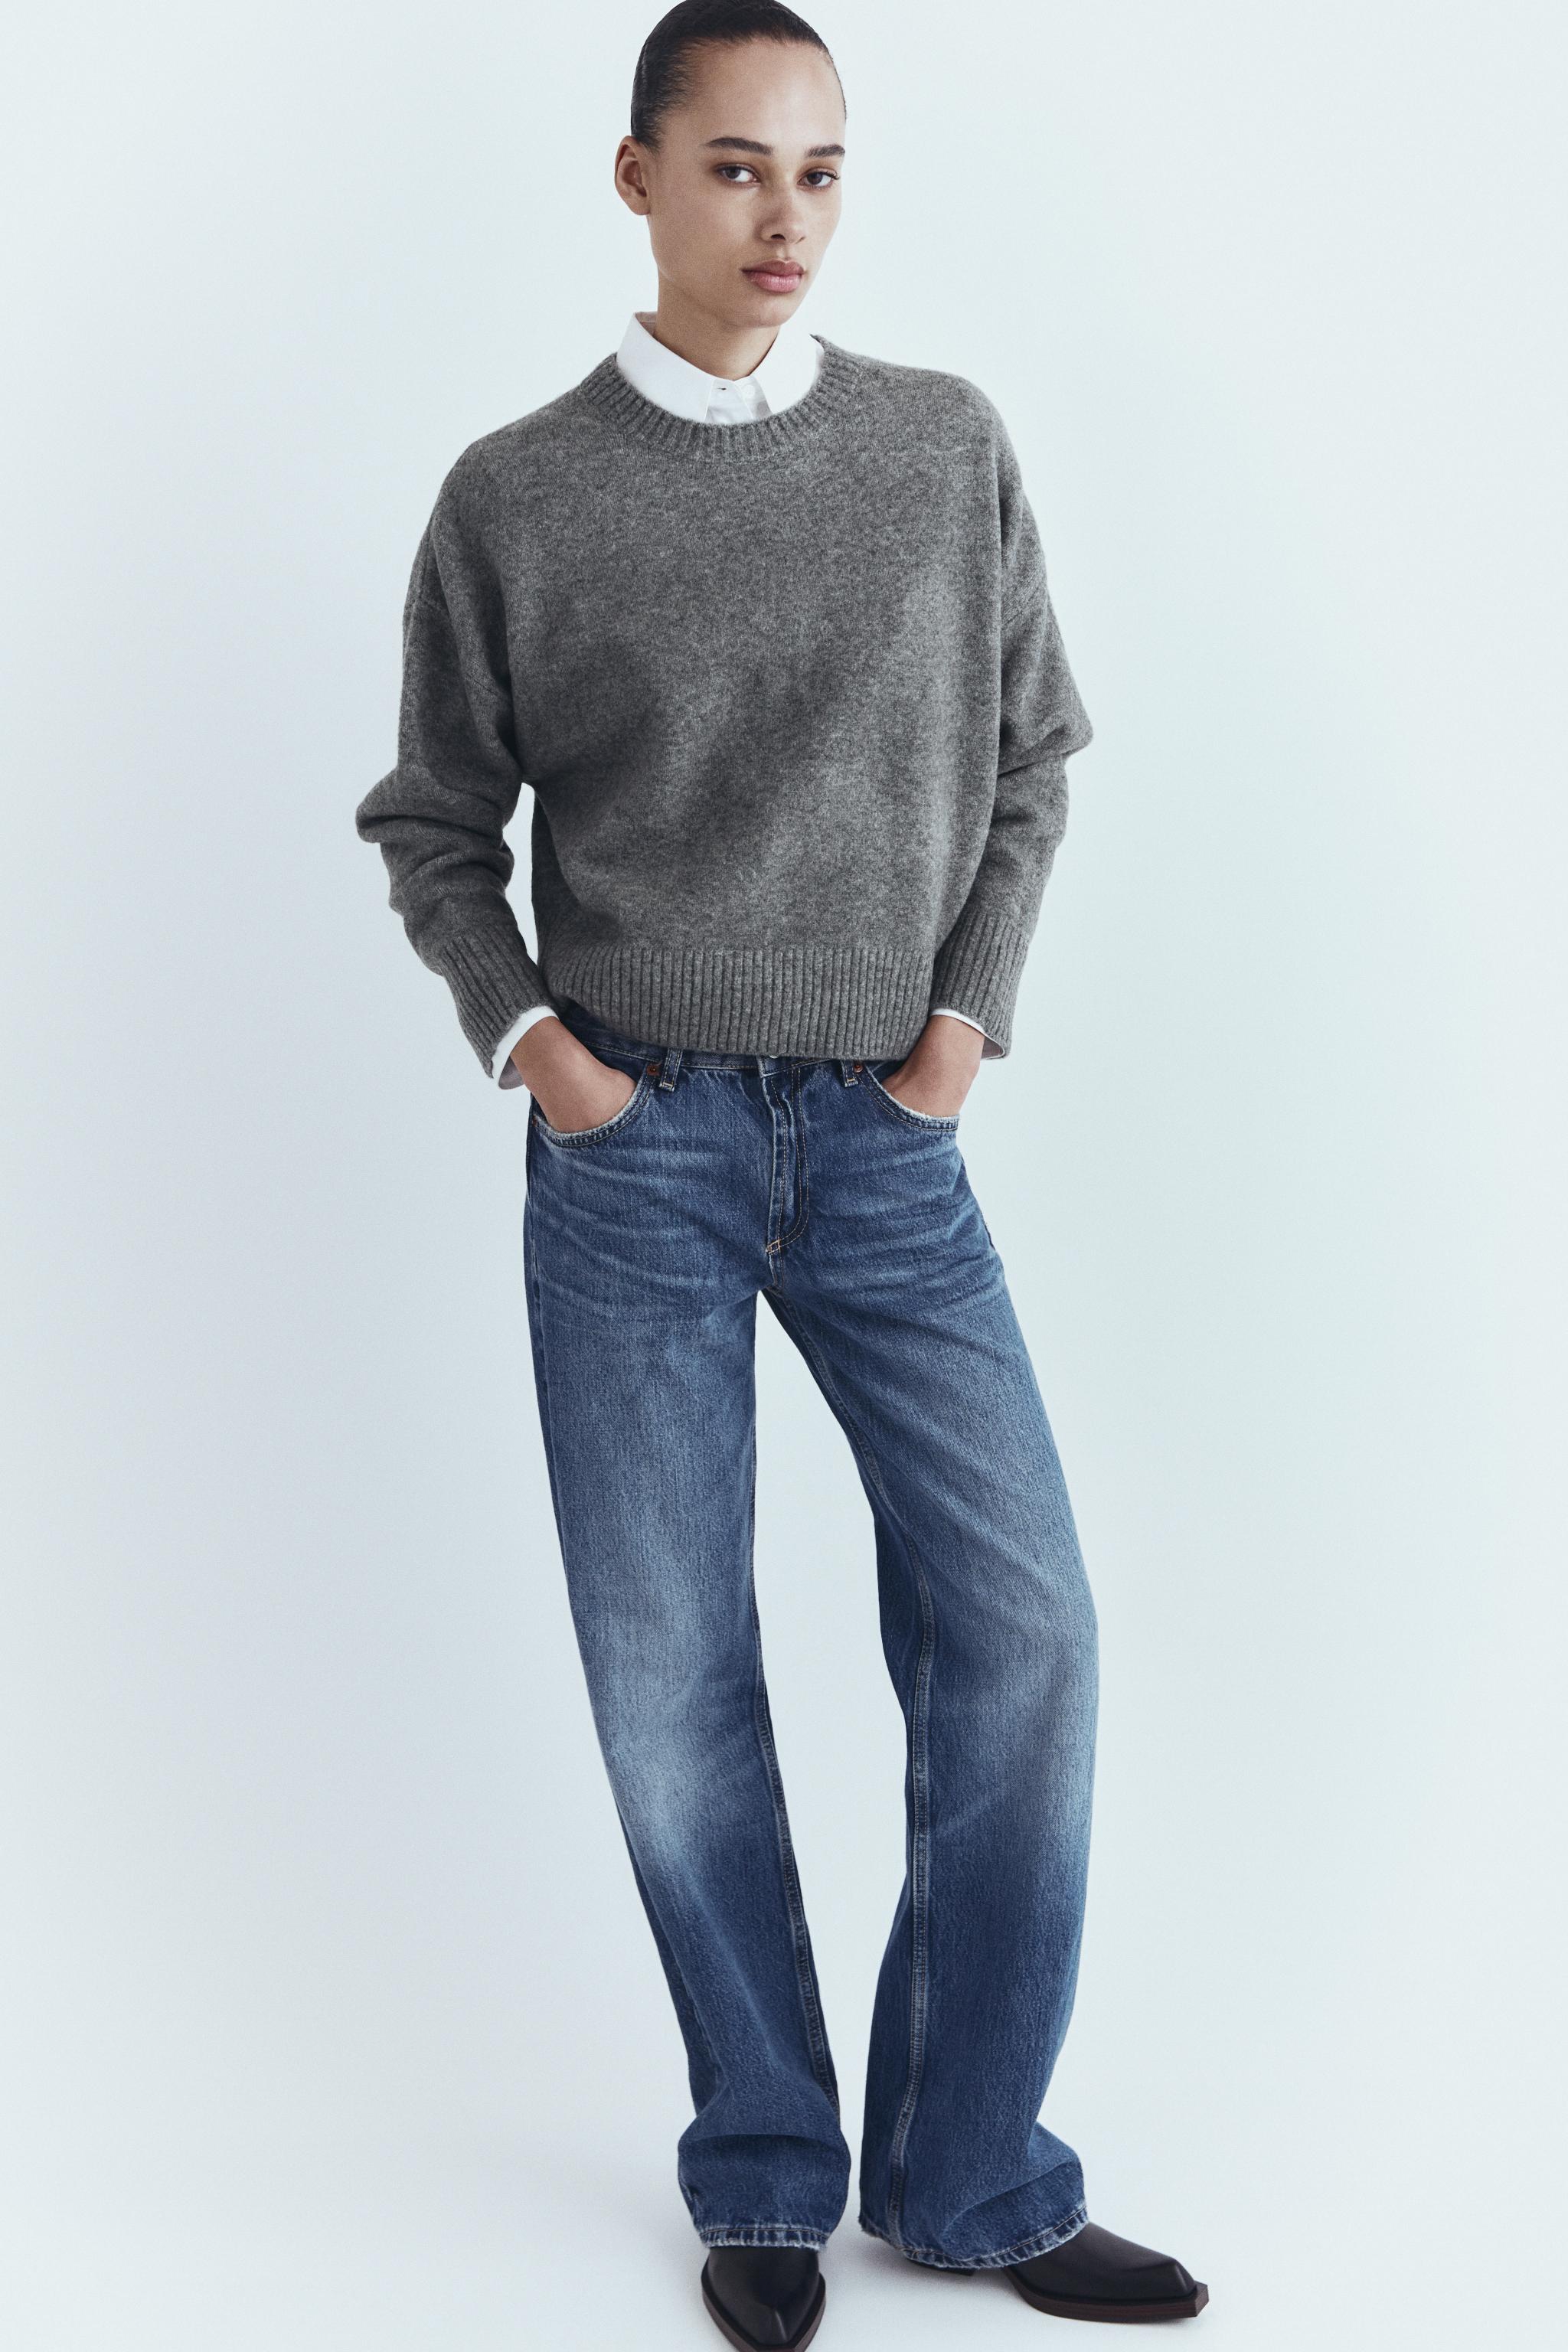 Jersey fucsia de punto soft de Zara (27,95 euros)  5 blazers, 5 jerséis y  5 pantalones de Zara que